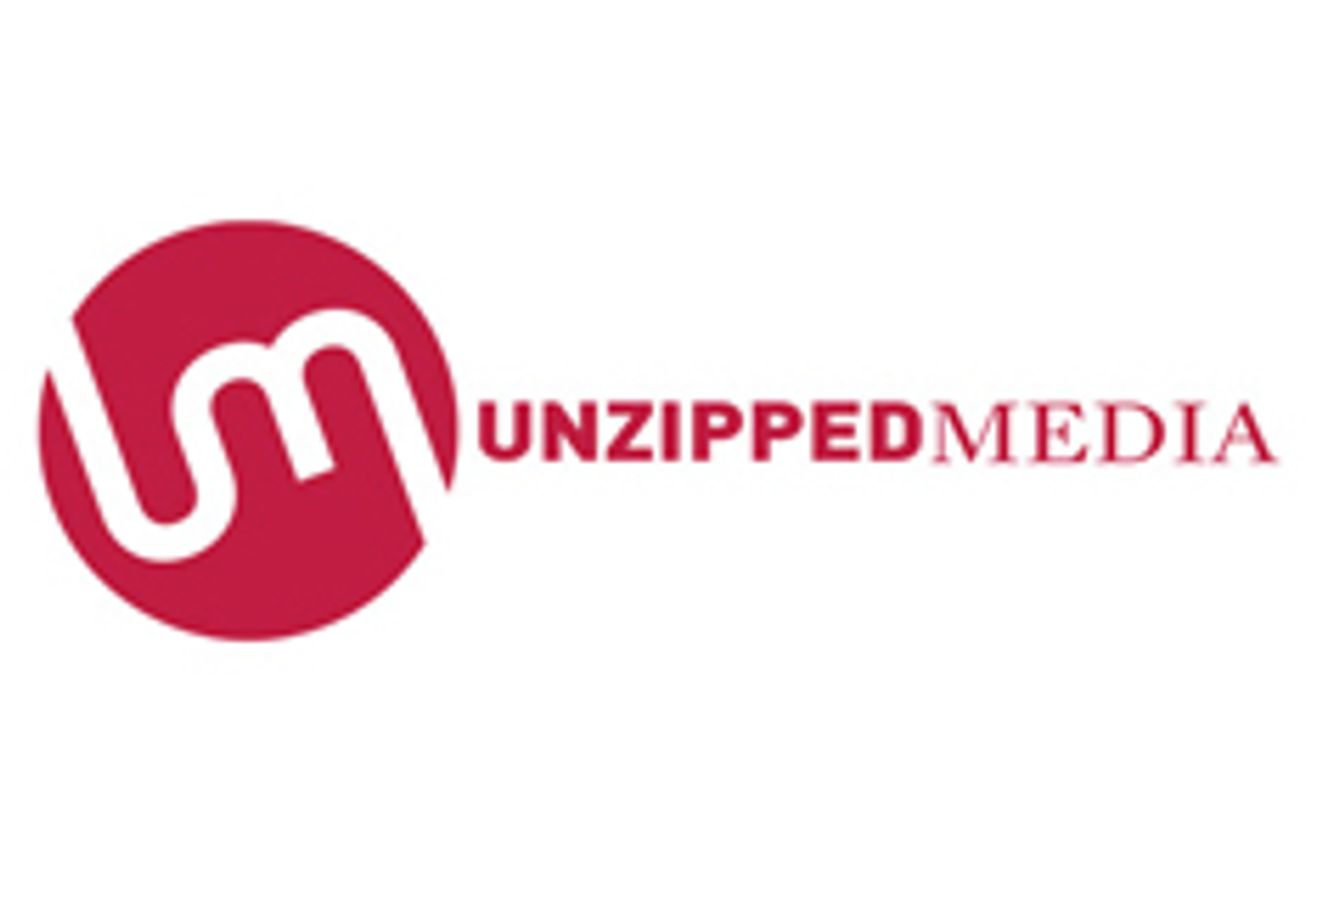 Unzipped Media